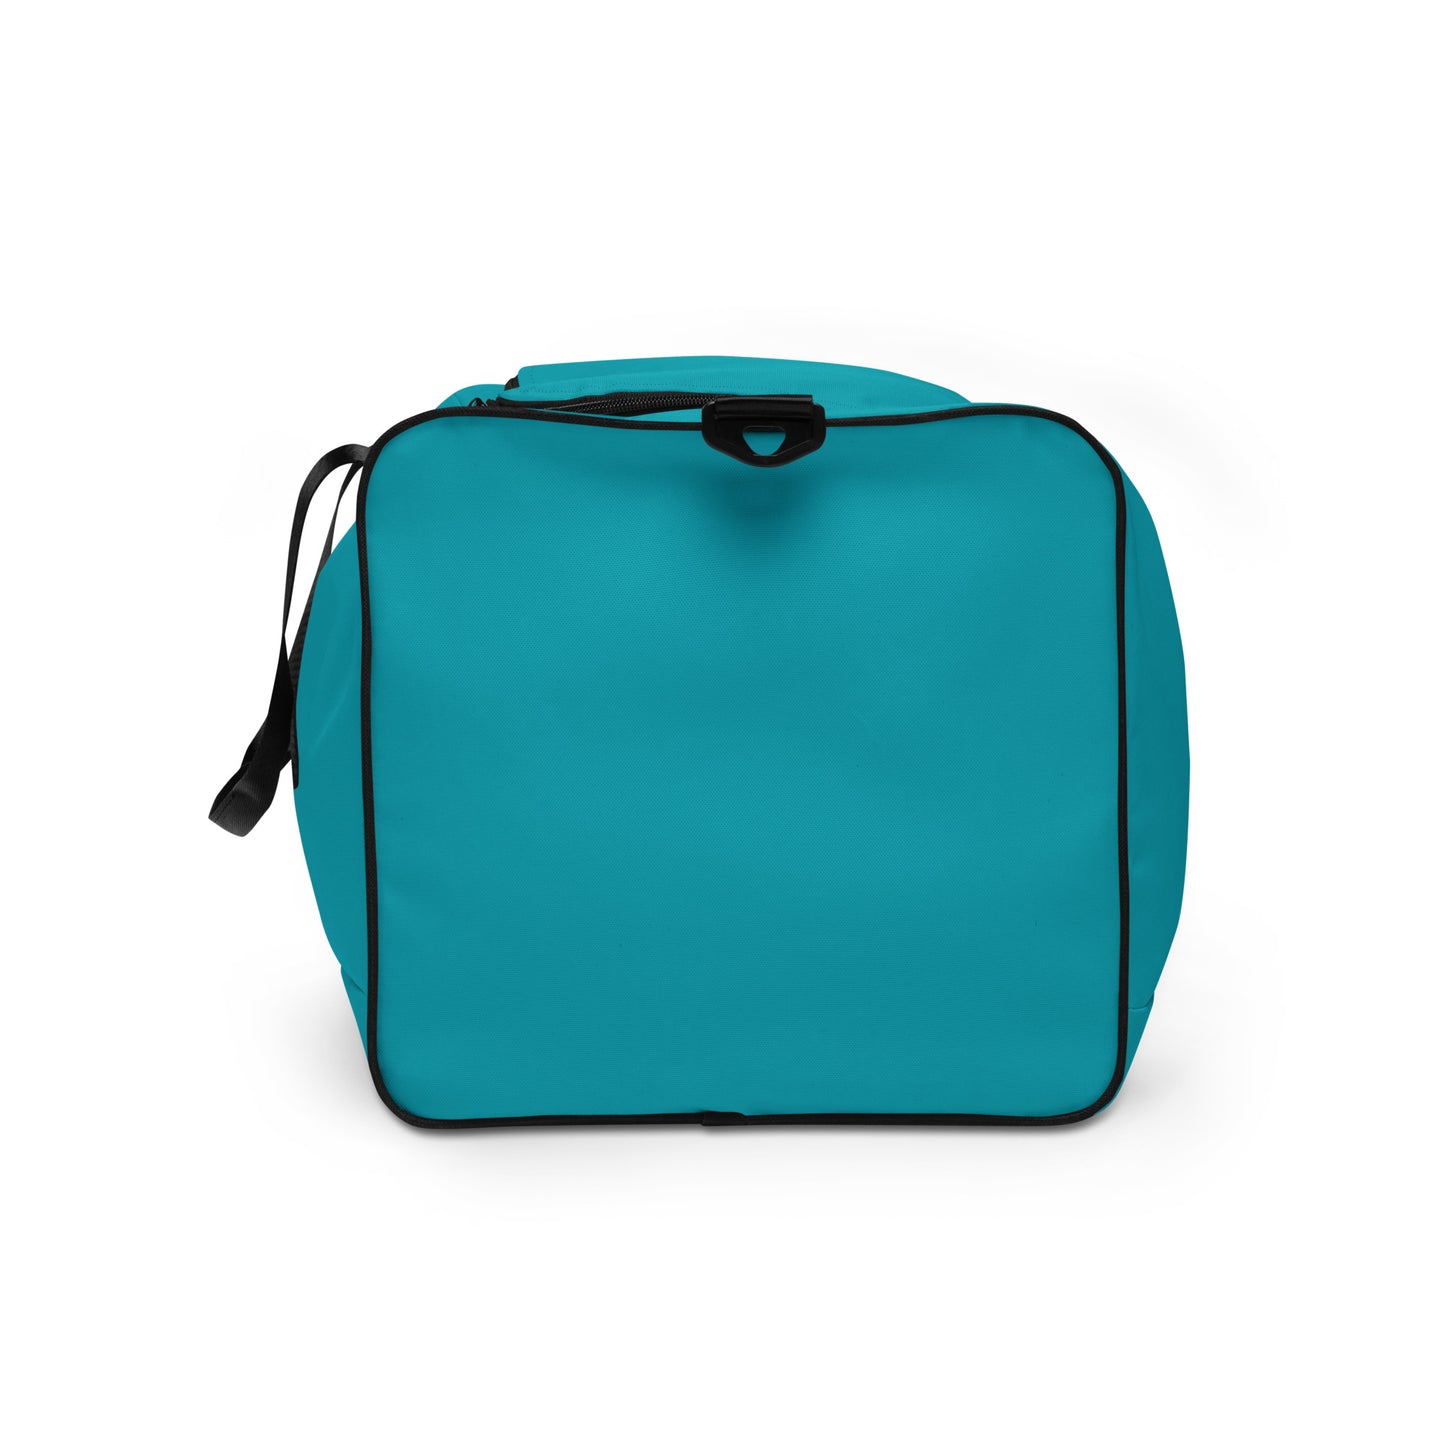 Turquoise Duffle bag